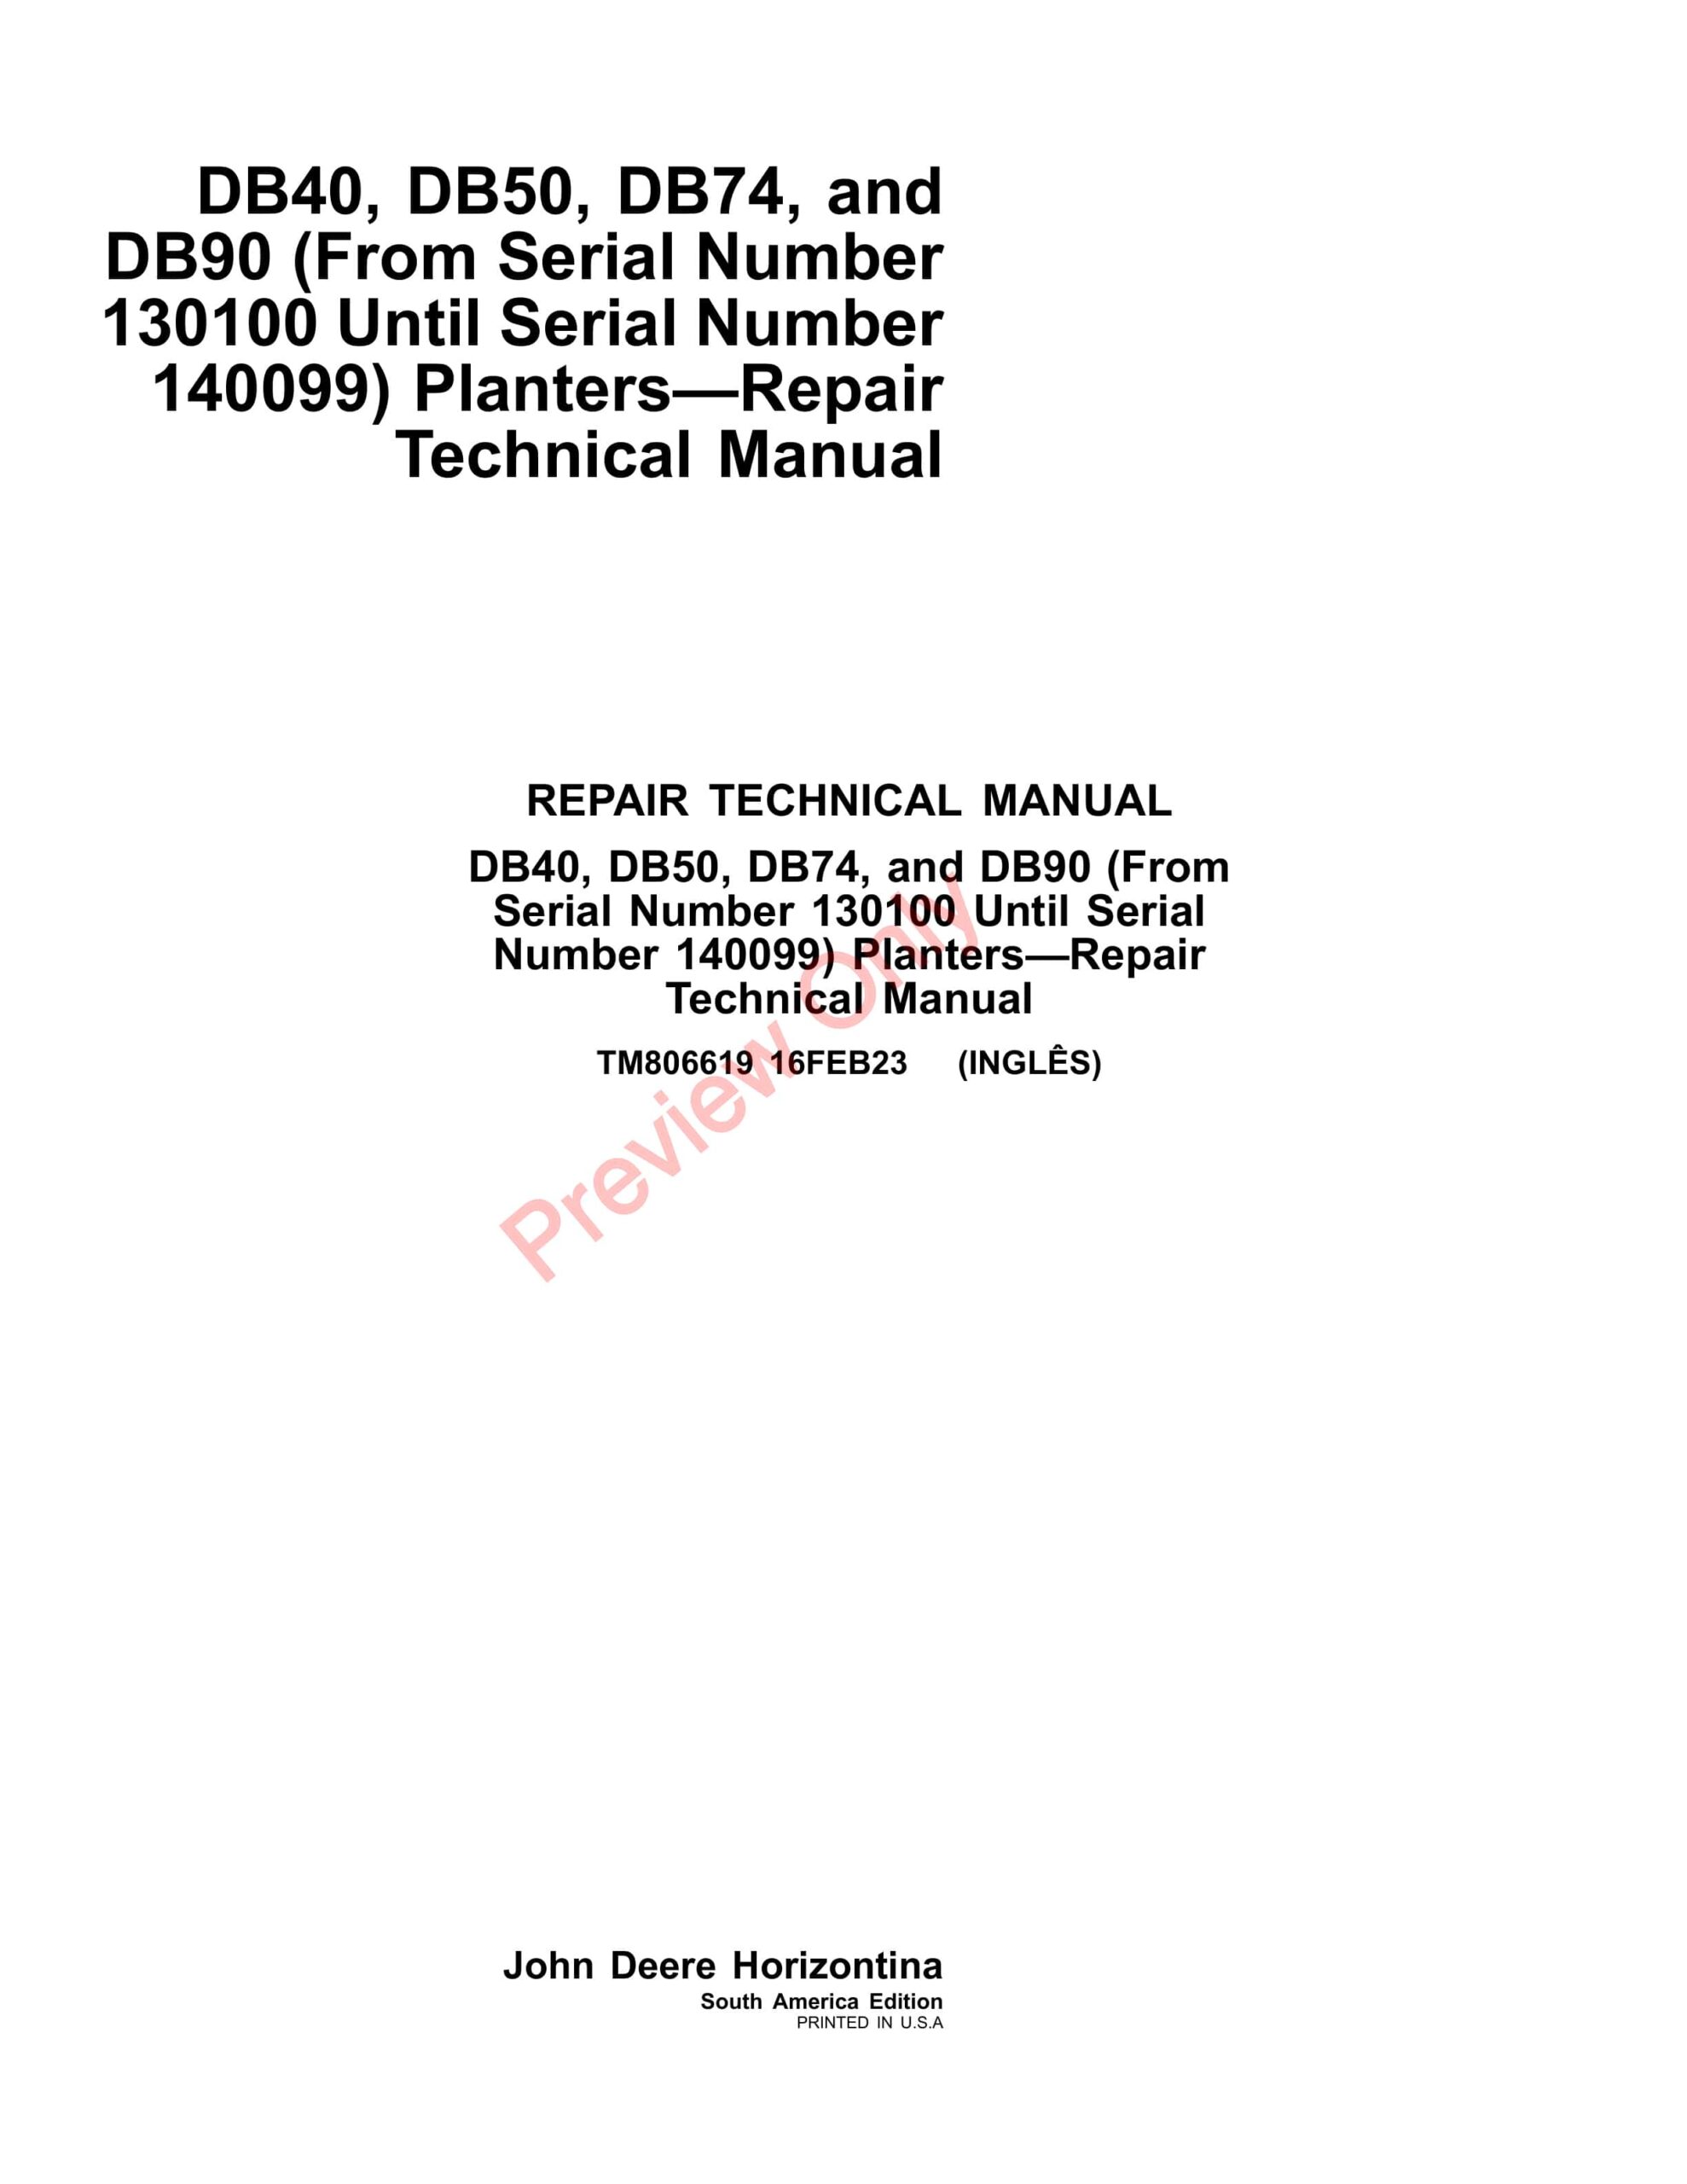 John Deere DB40, DB50, DB74, DB90 Planter (130100-140099) Repair Technical Manual TM806619 16FEB23-1